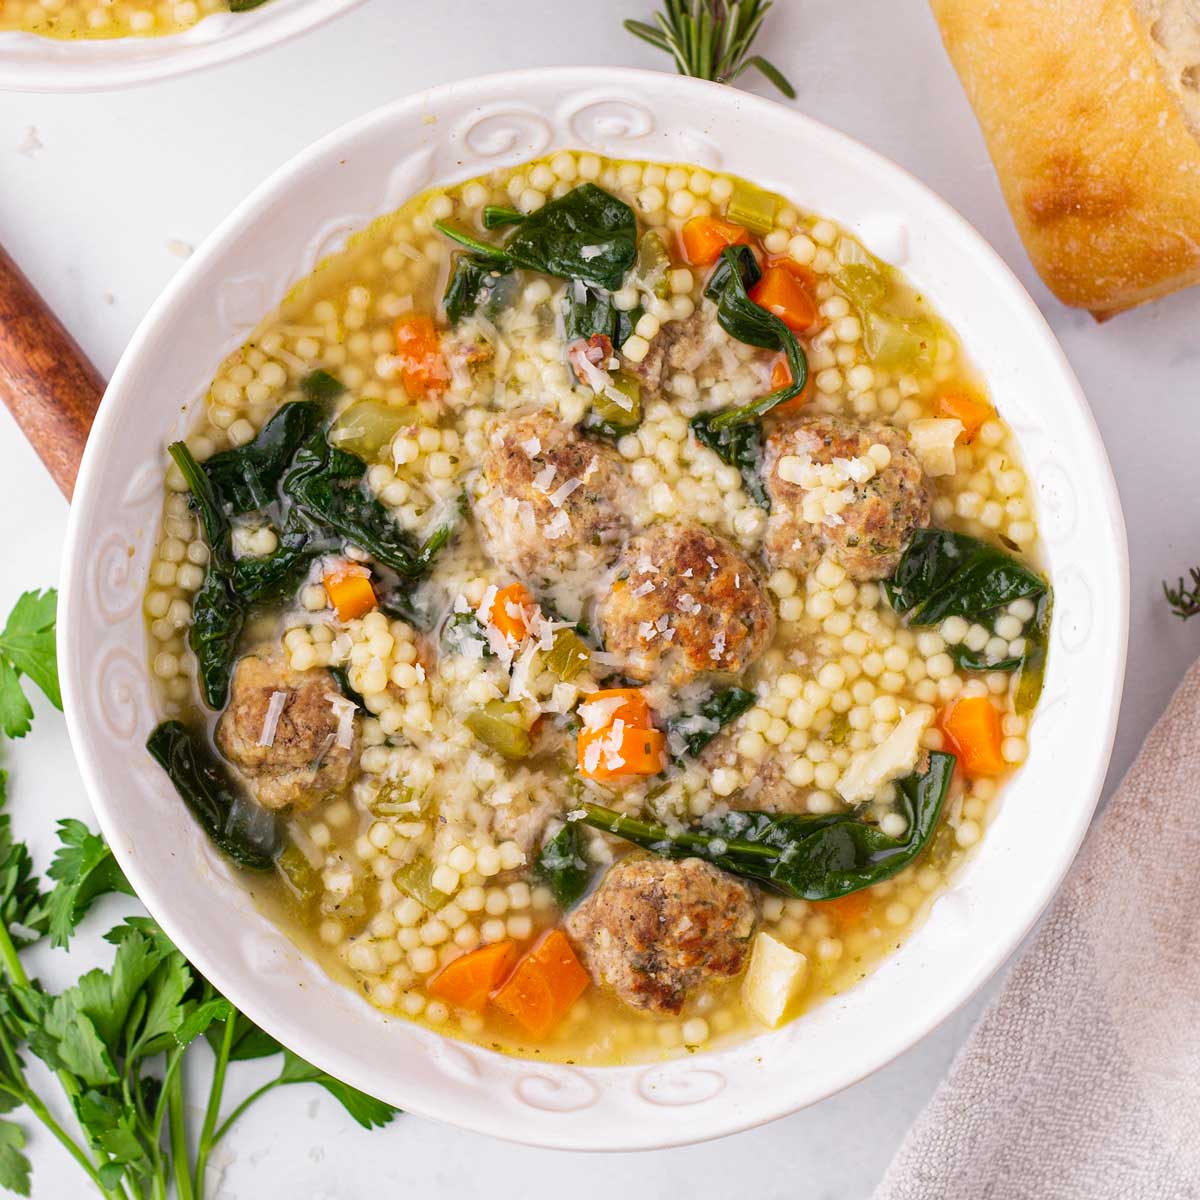 Italian Wedding Soup - The Cozy Cook